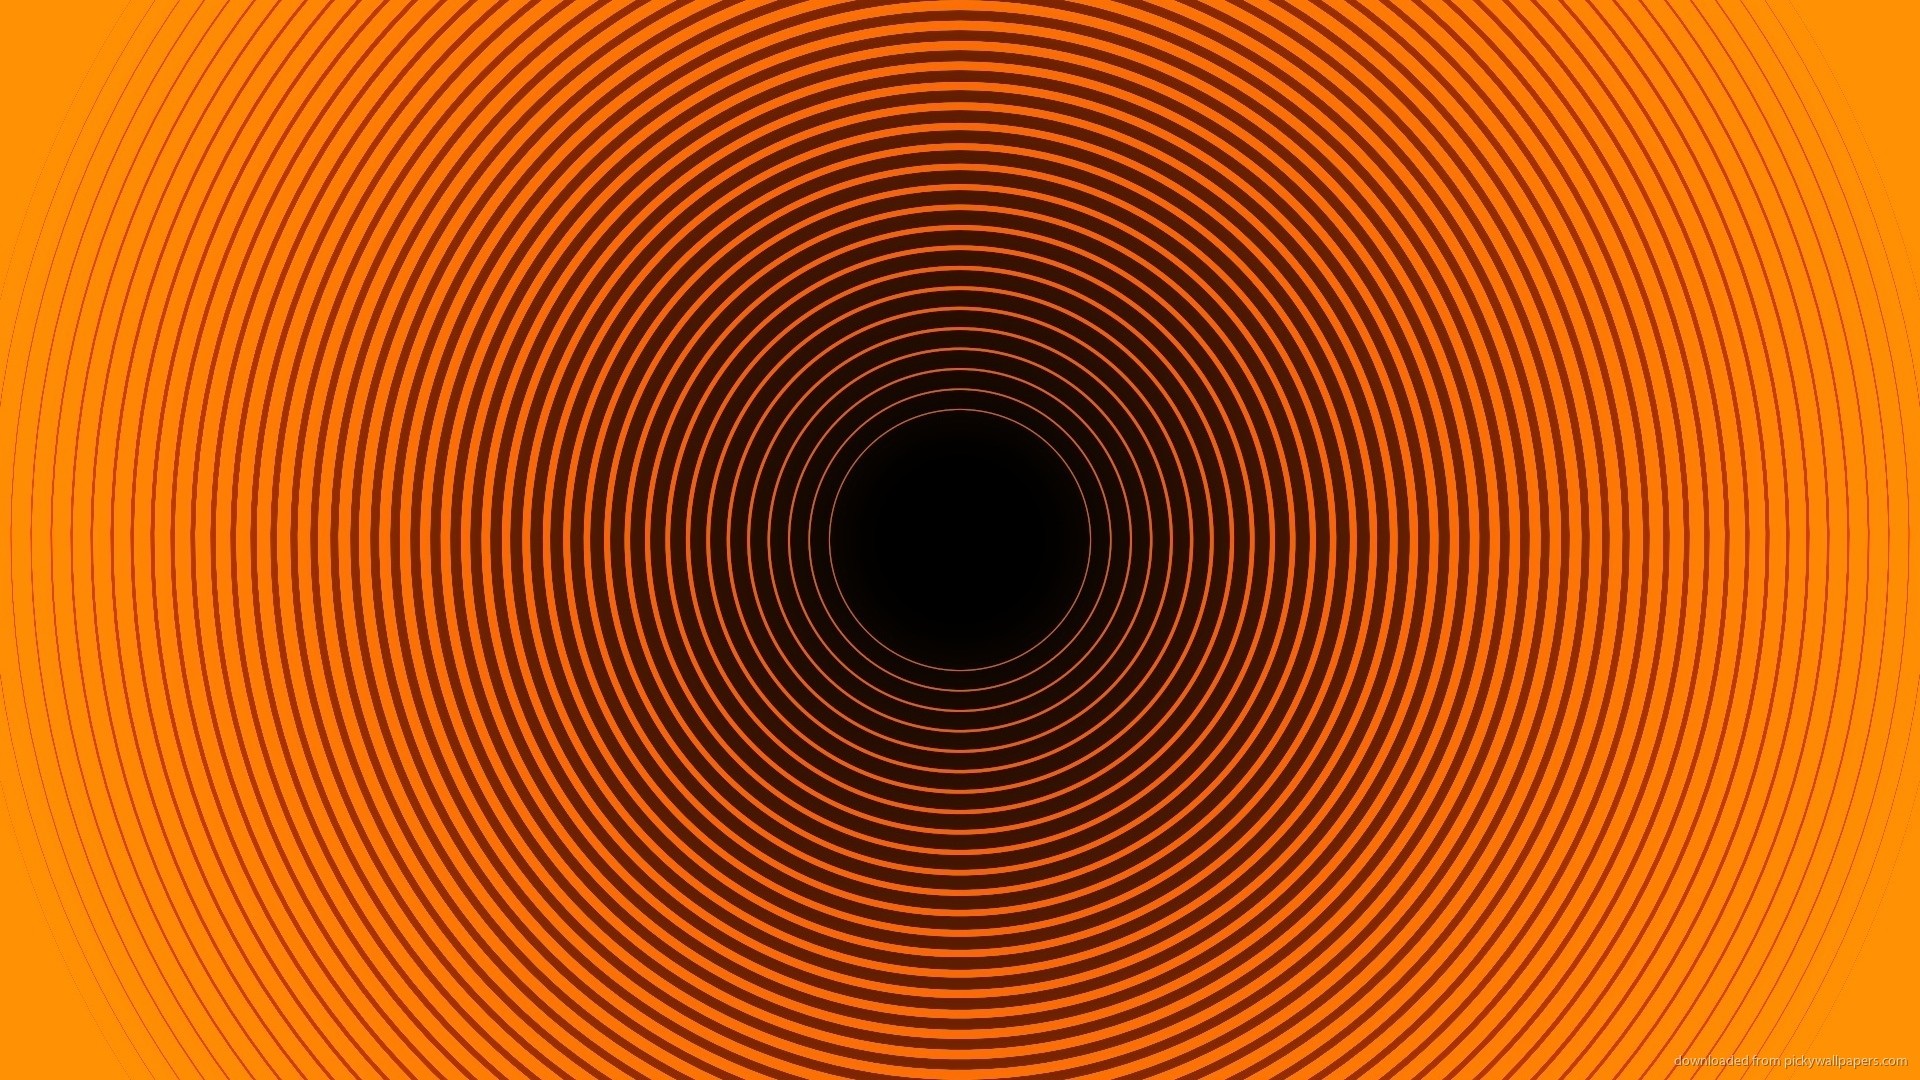 1920x1080  Orange and Black Optical Illusion Wallpaper wallpaper